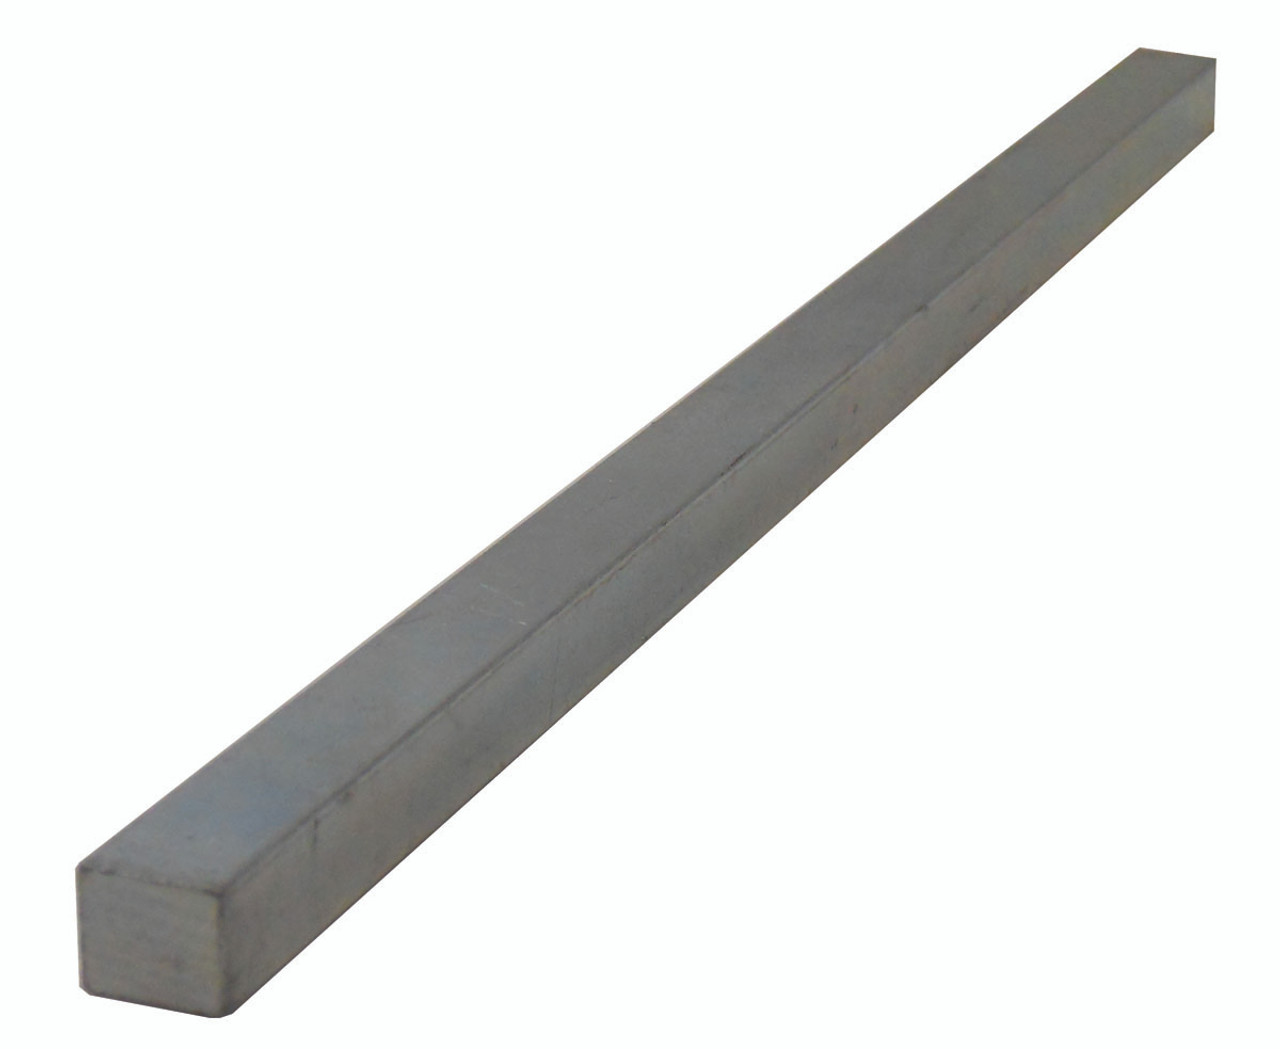 Rectangular SAE 5/8 x 1-1/4 x 36" Zinc Plated Steel Keystock  .625-1250-36